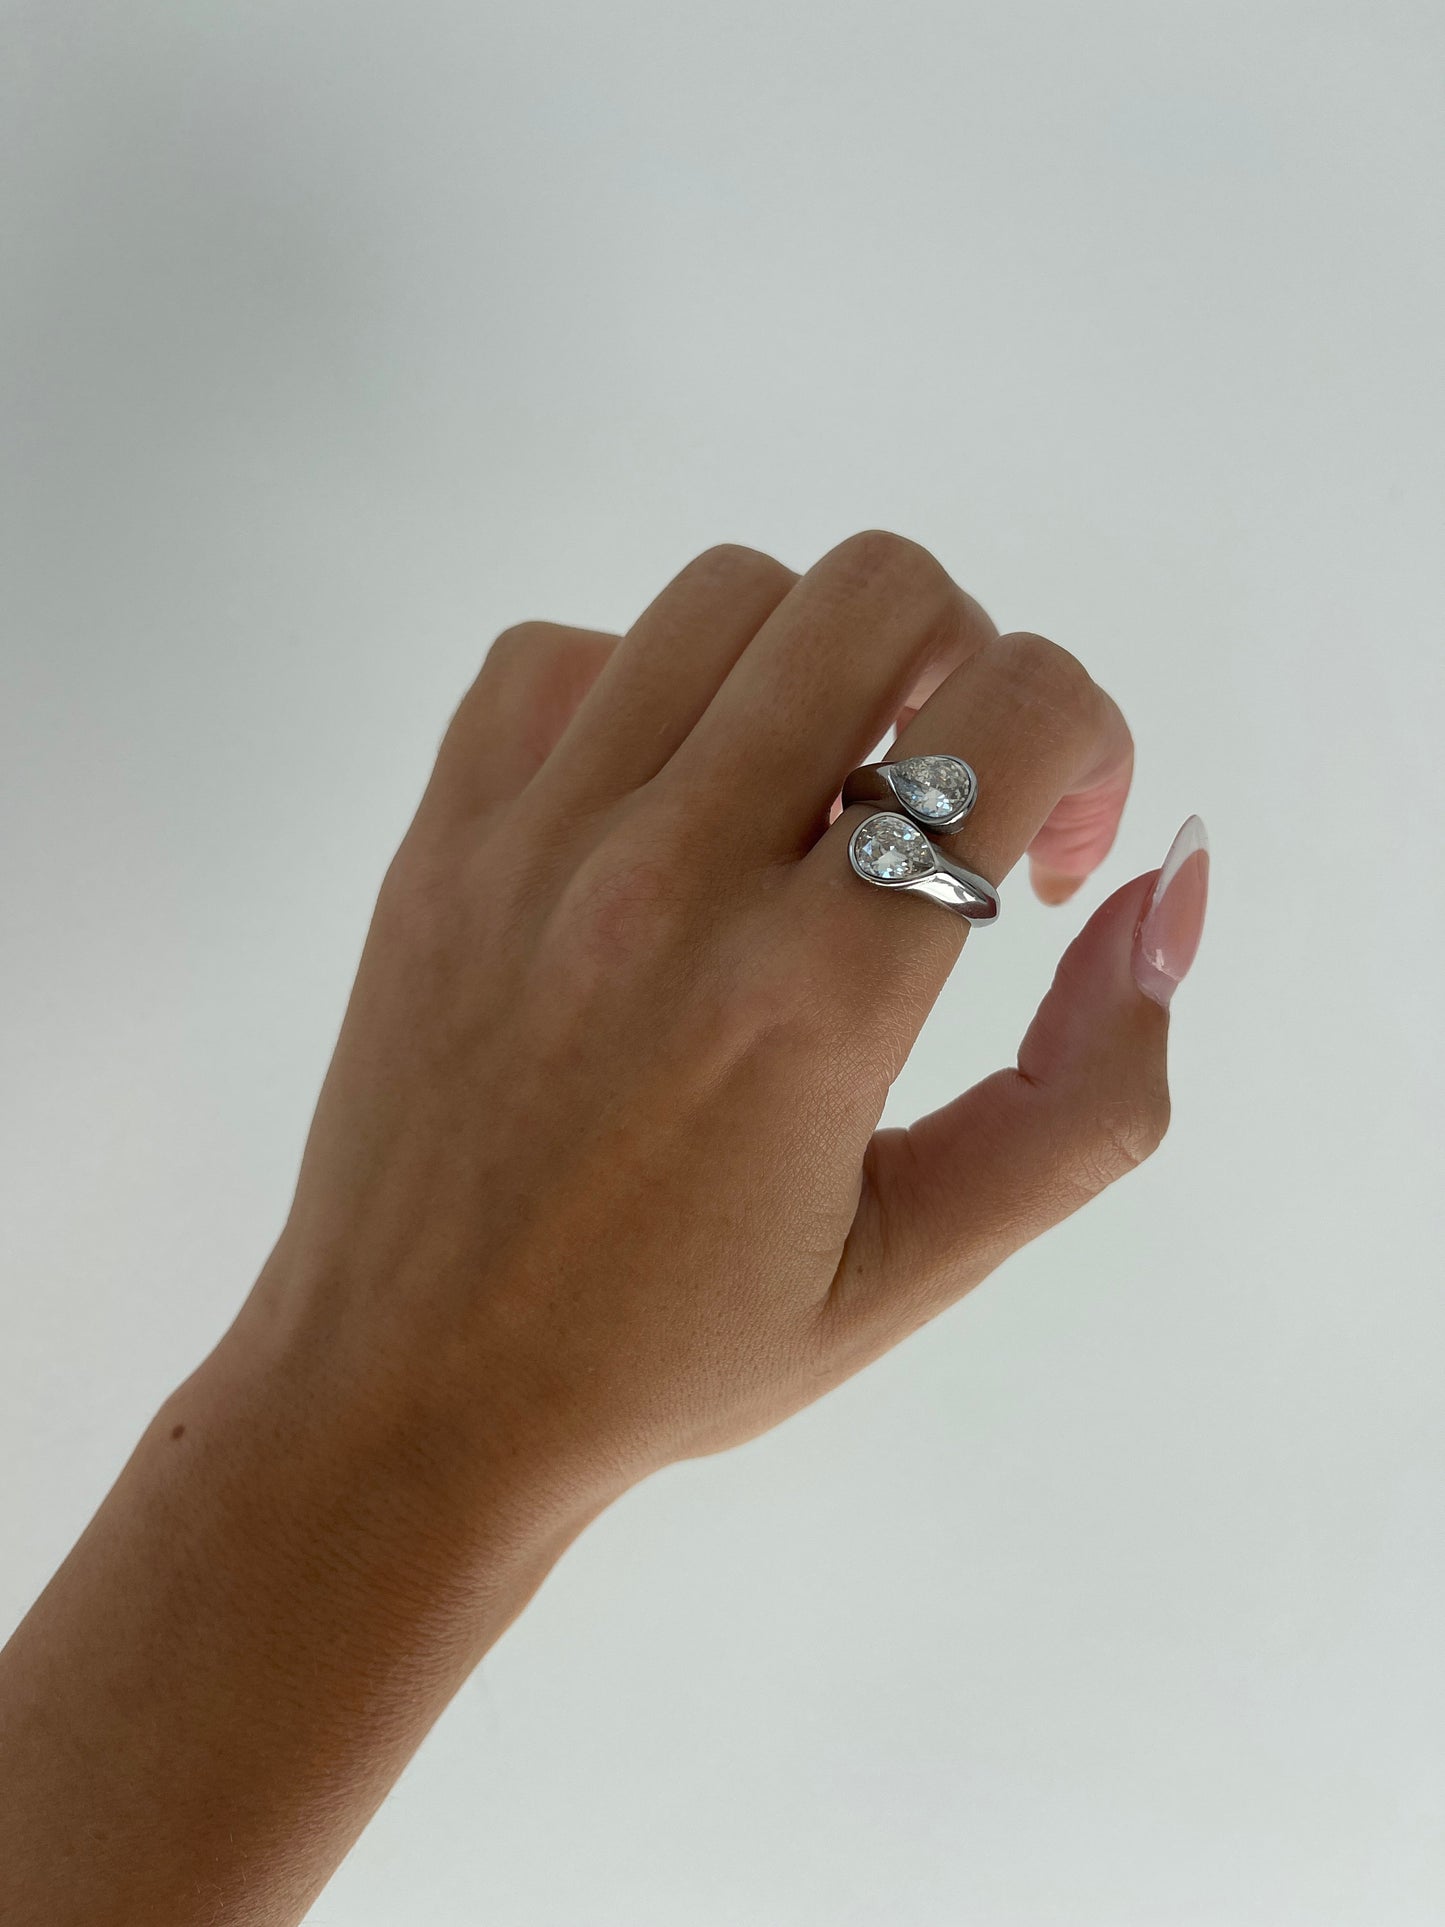 Adjustable ring gold, gold ring statement rings, wrap ring, open ring, minimalist gold adjustable ring, chunky gold ring irregular ring